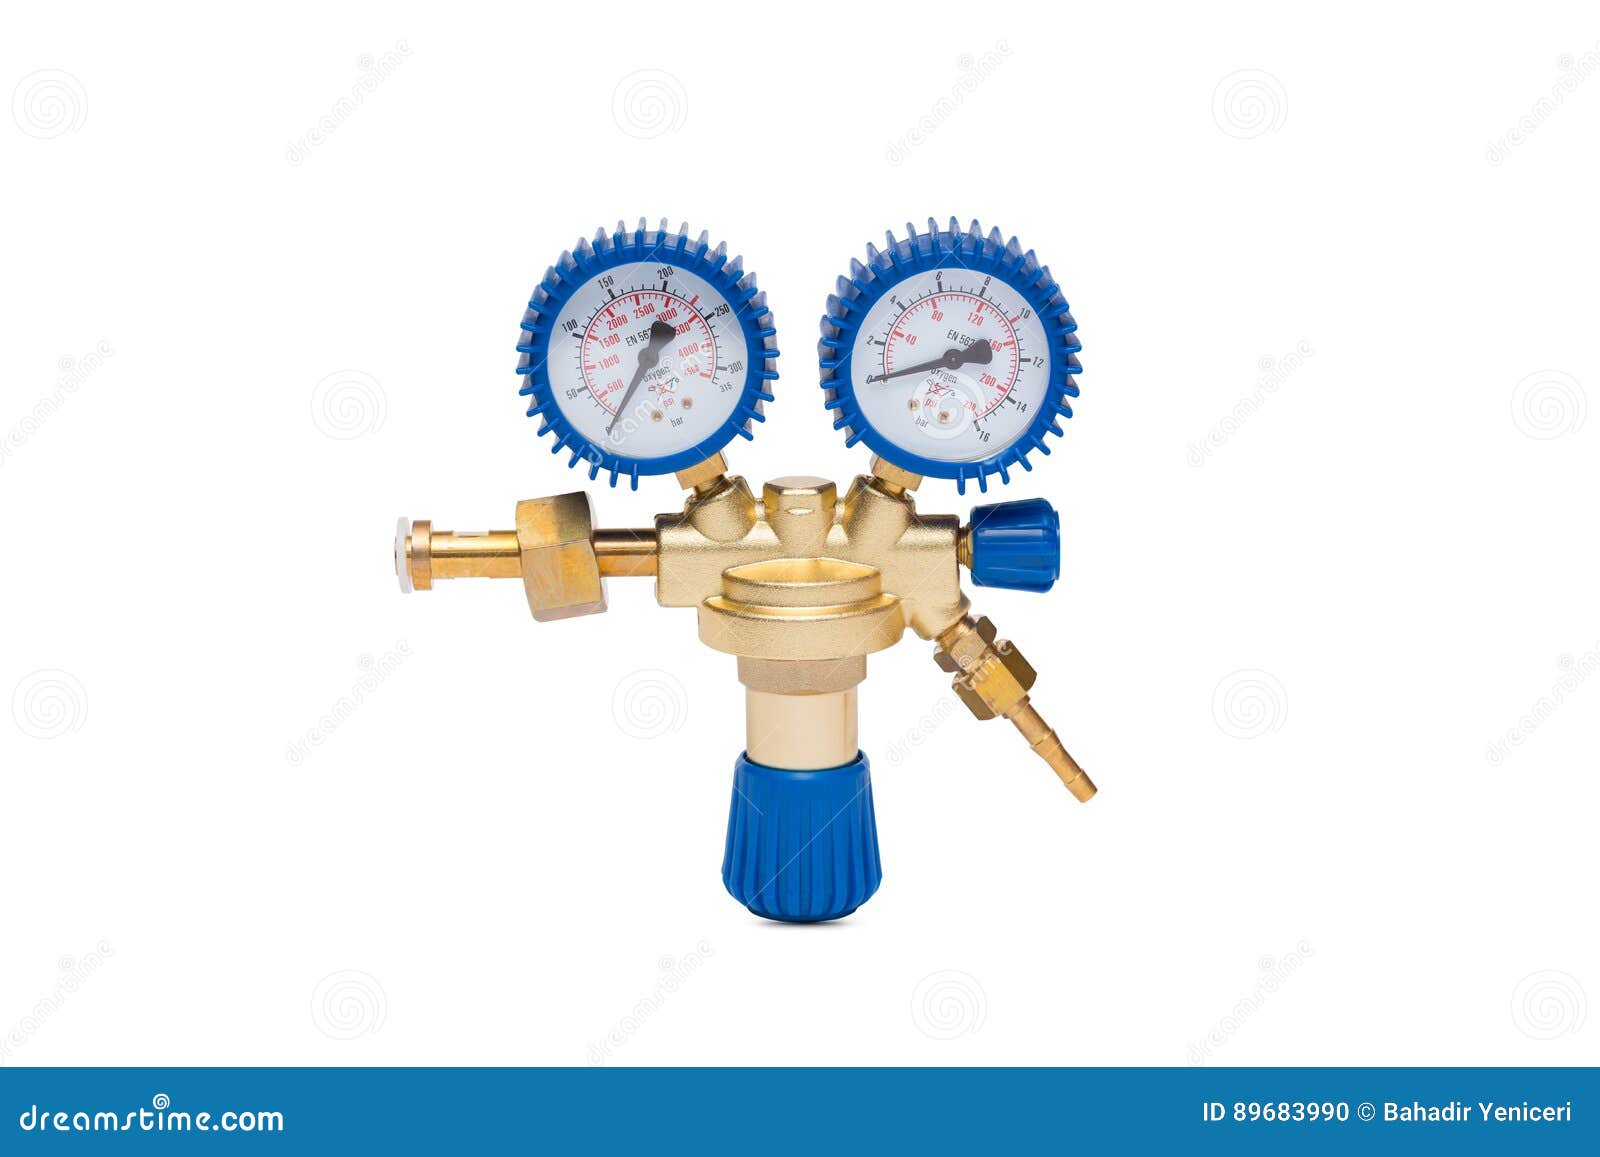 Oxygen Pressure Regulator stock photo. Image of energy - 89683990